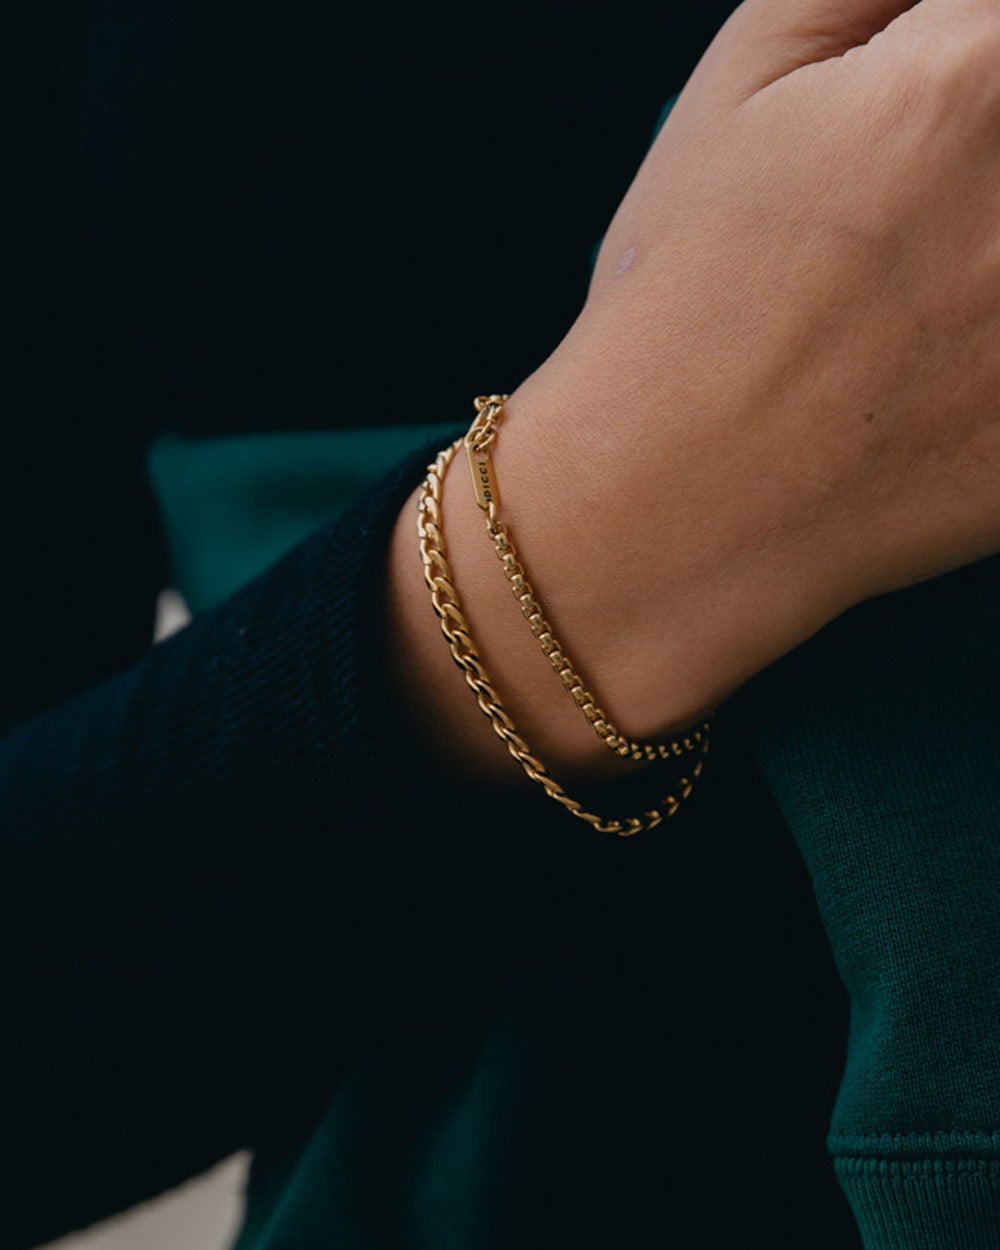 Golden Stainless Steel Bracelet 'Kauai' - Unisex Jewelry - Dicci